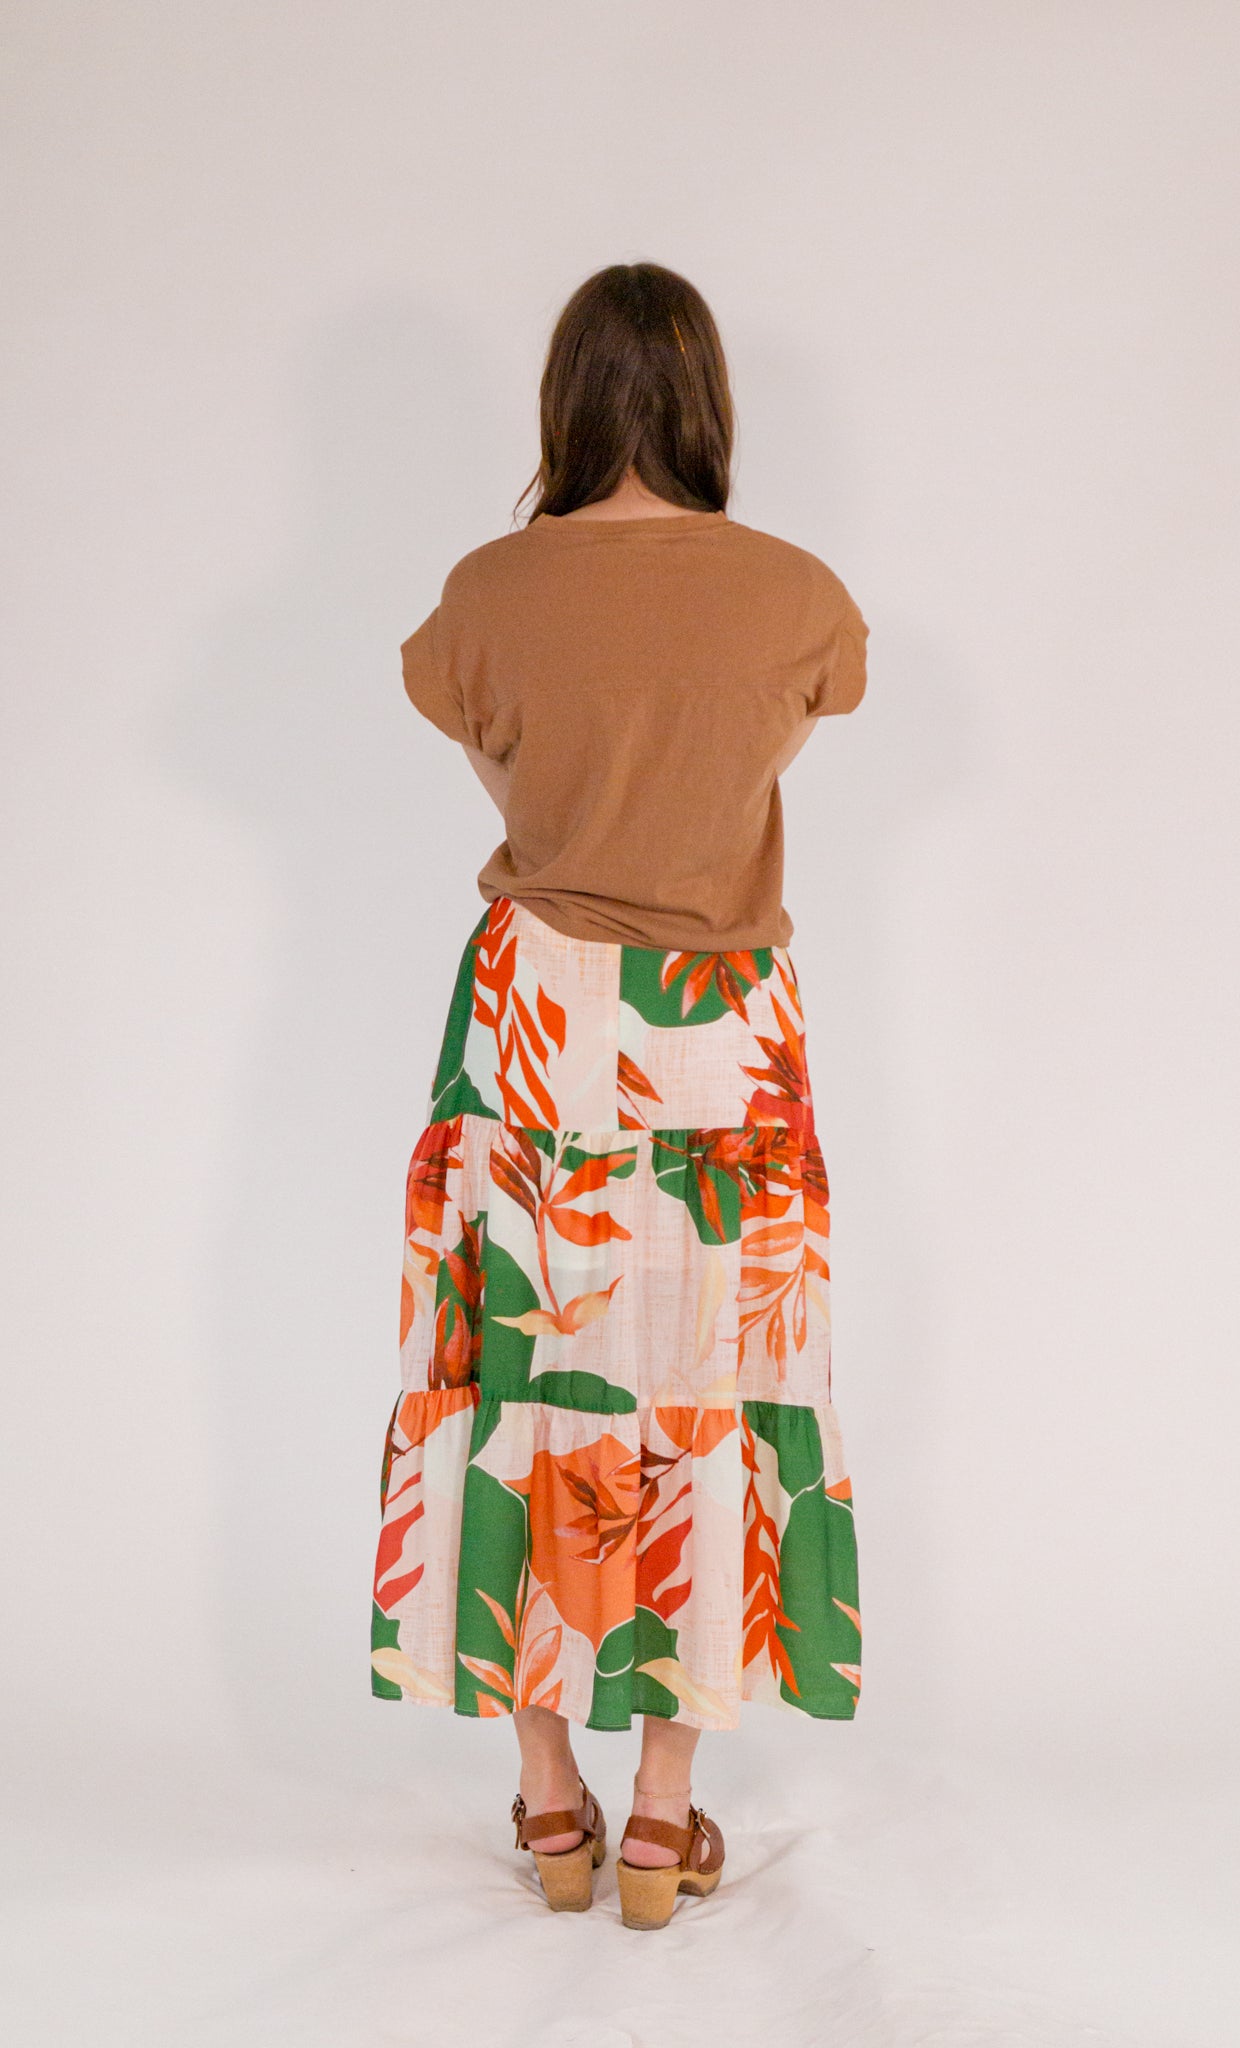 Saylor Floral Skirt